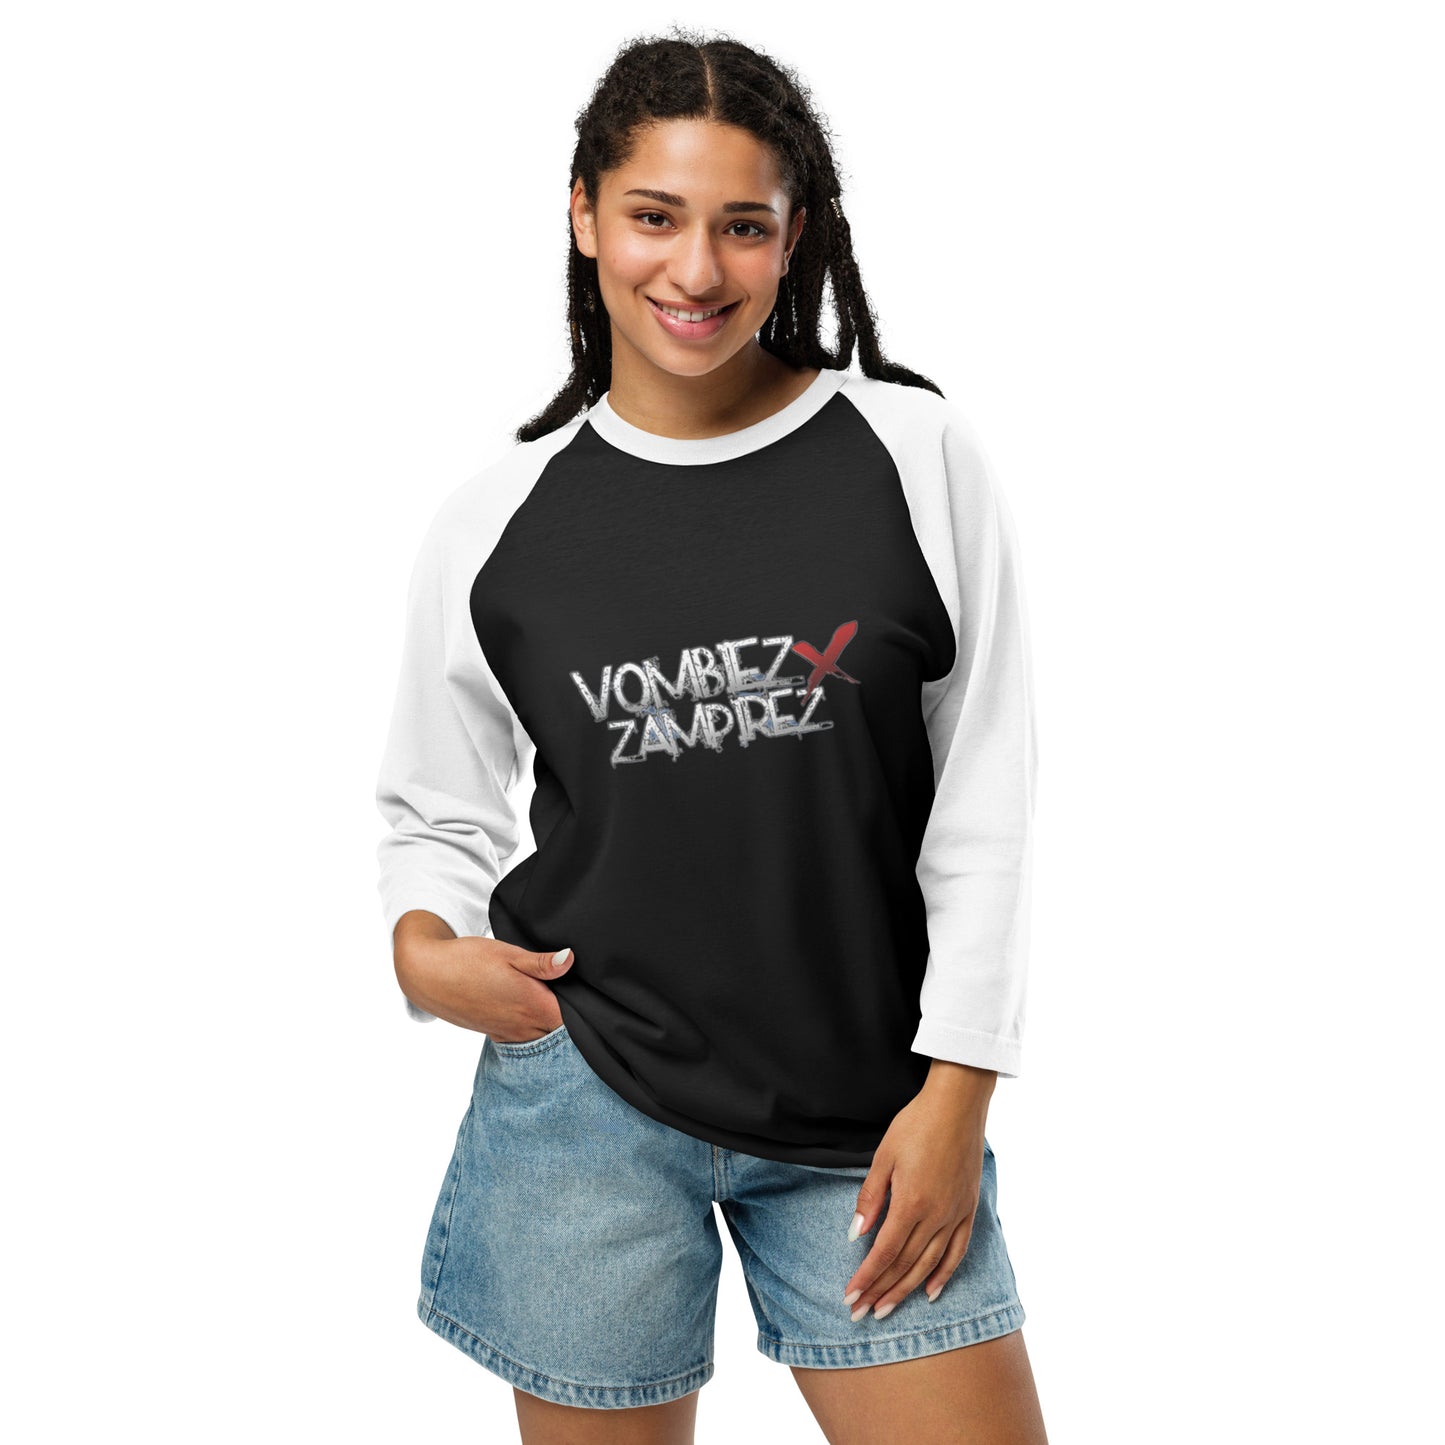 Vombiez x Zampirez 3/4 Sleeve Raglan Shirt